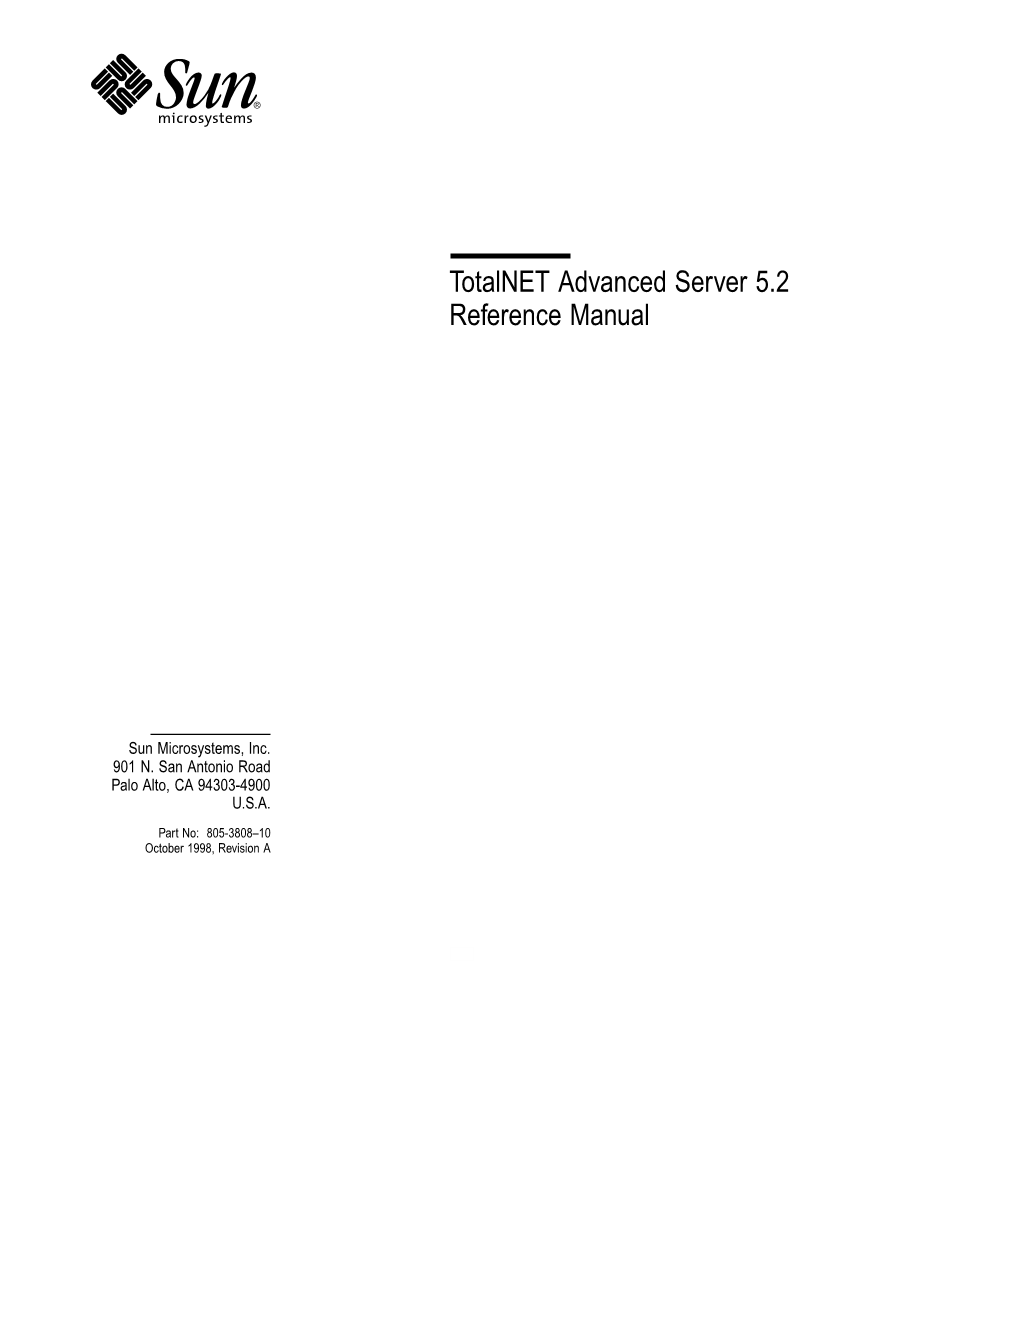 Totalnet Advanced Server 5.2 Reference Manual